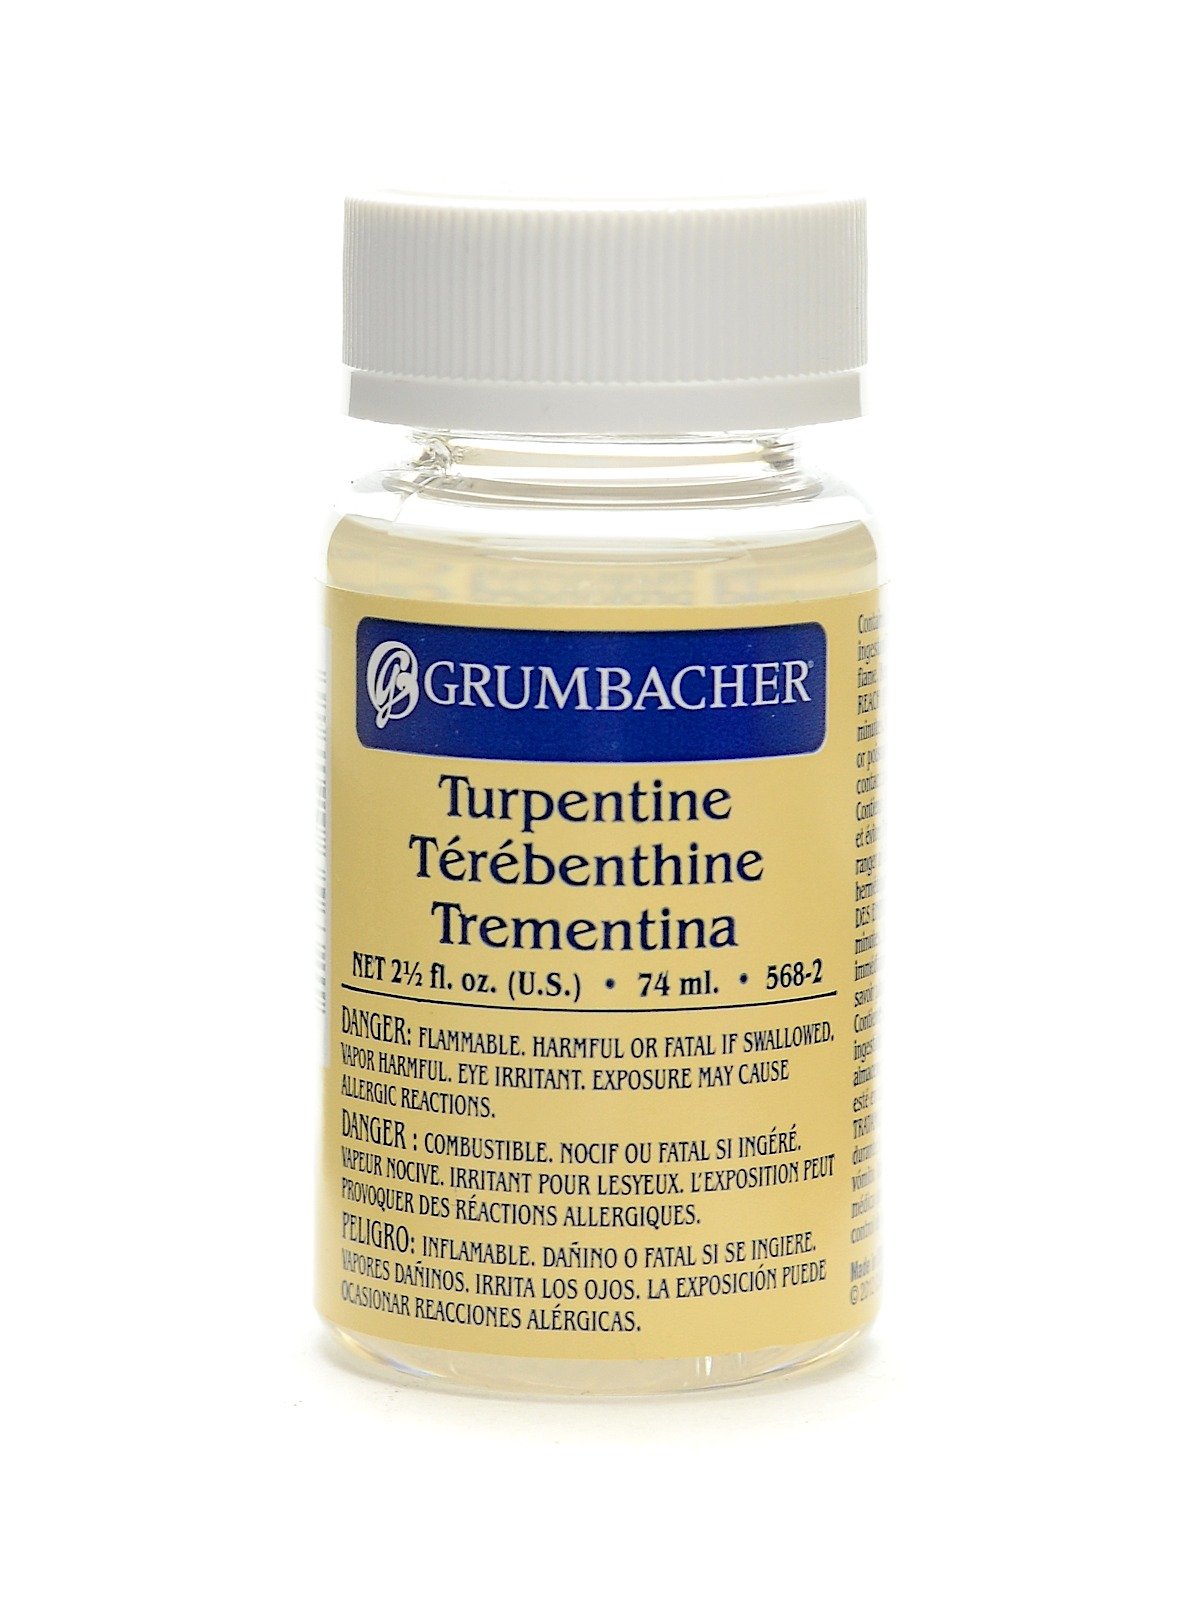 Spirits of Turpentine Oil